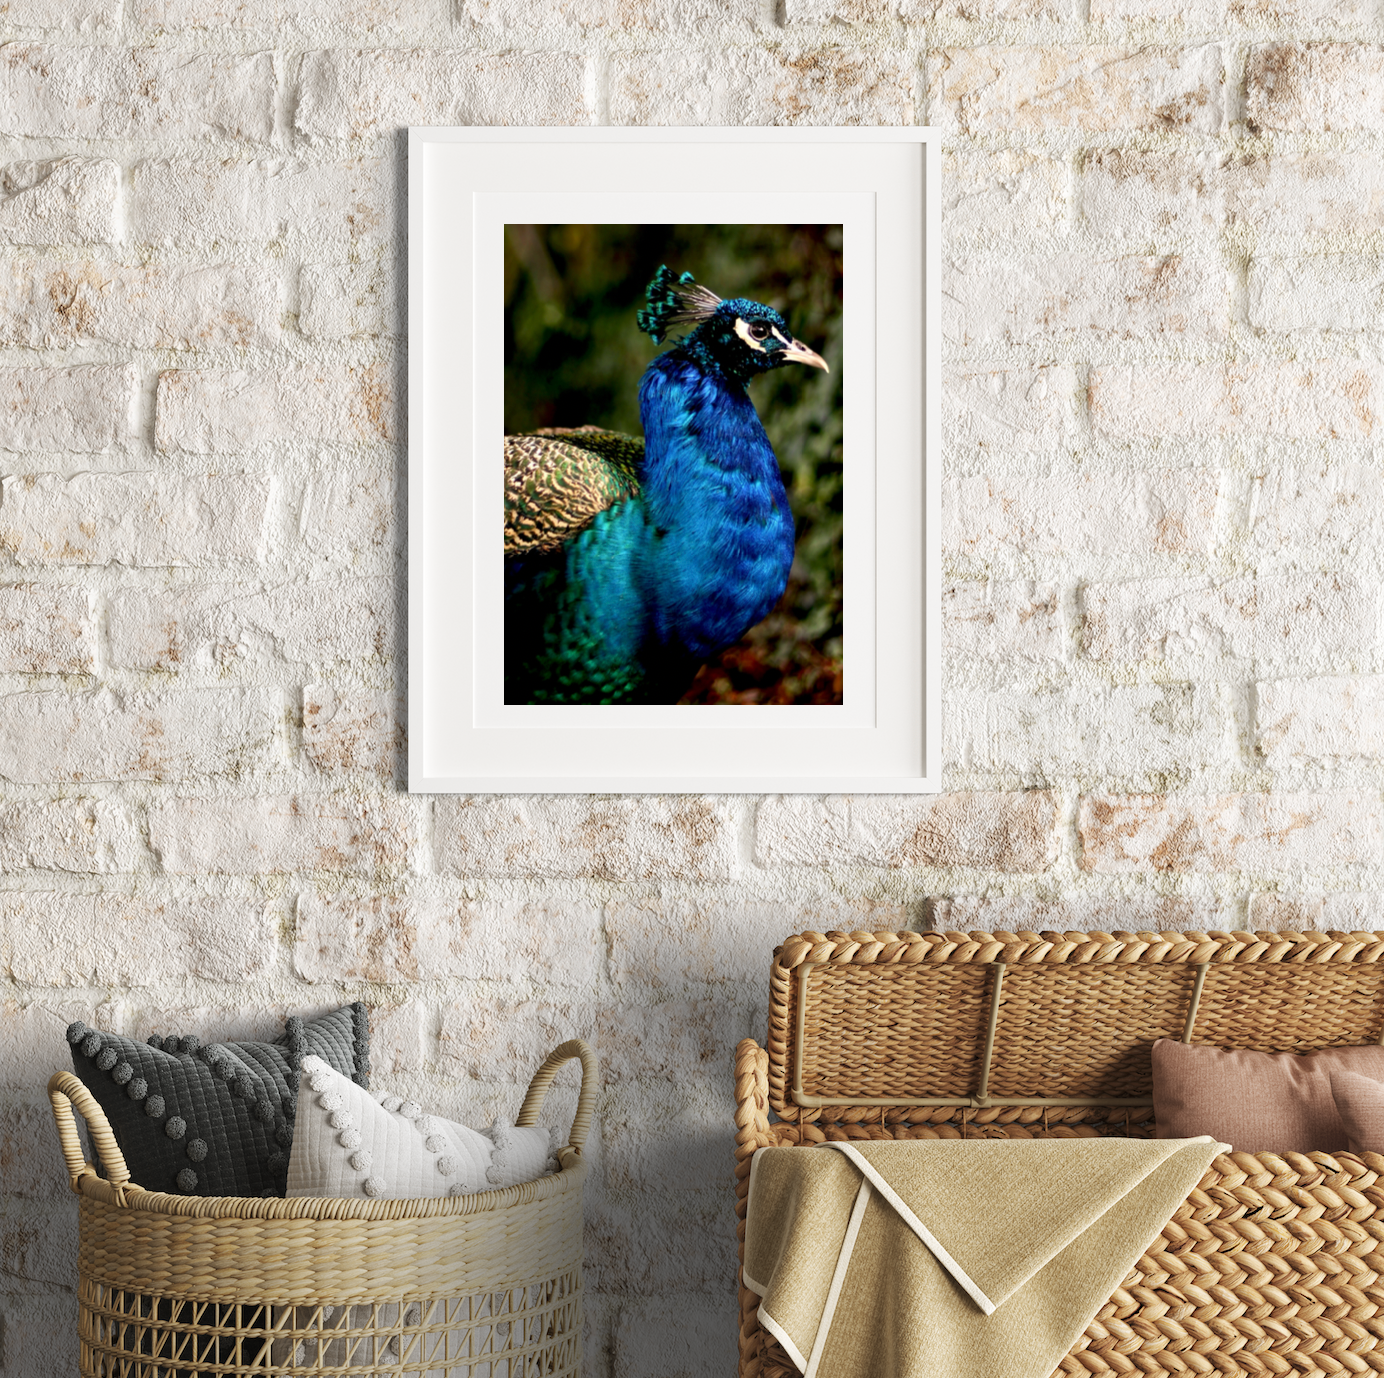 Iridescent Peacock Nº 1 • Fine Photography Print